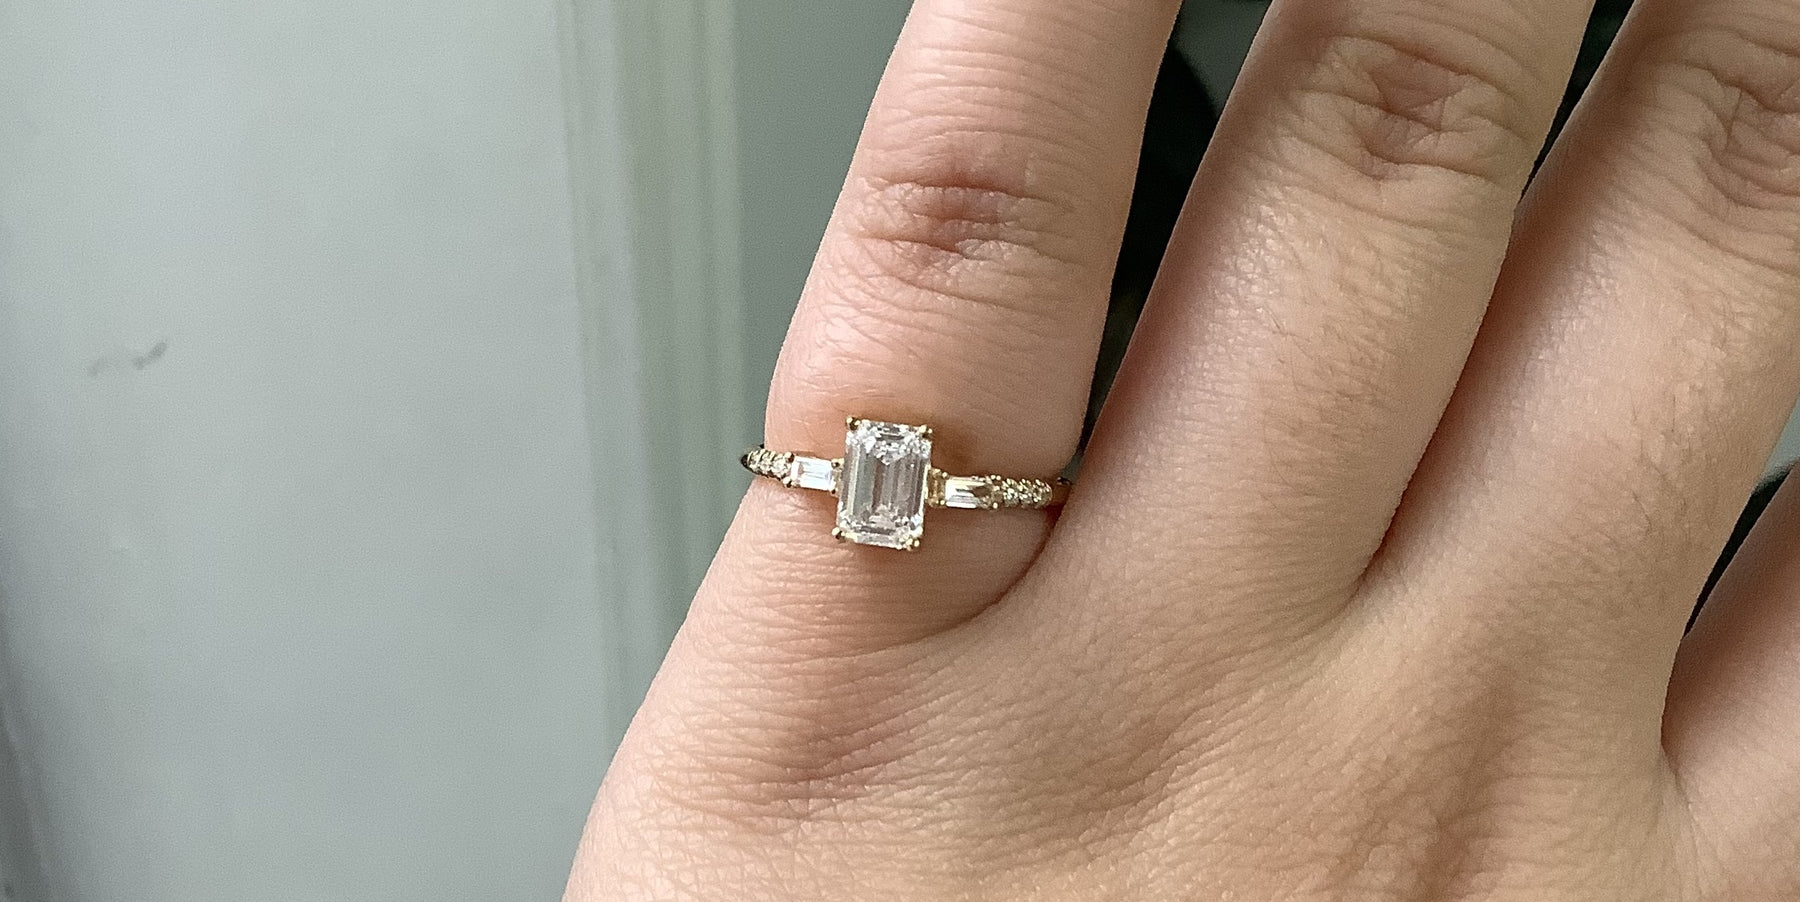 14k yellow gold custom engagement ring with emerald cut white diamond center stone